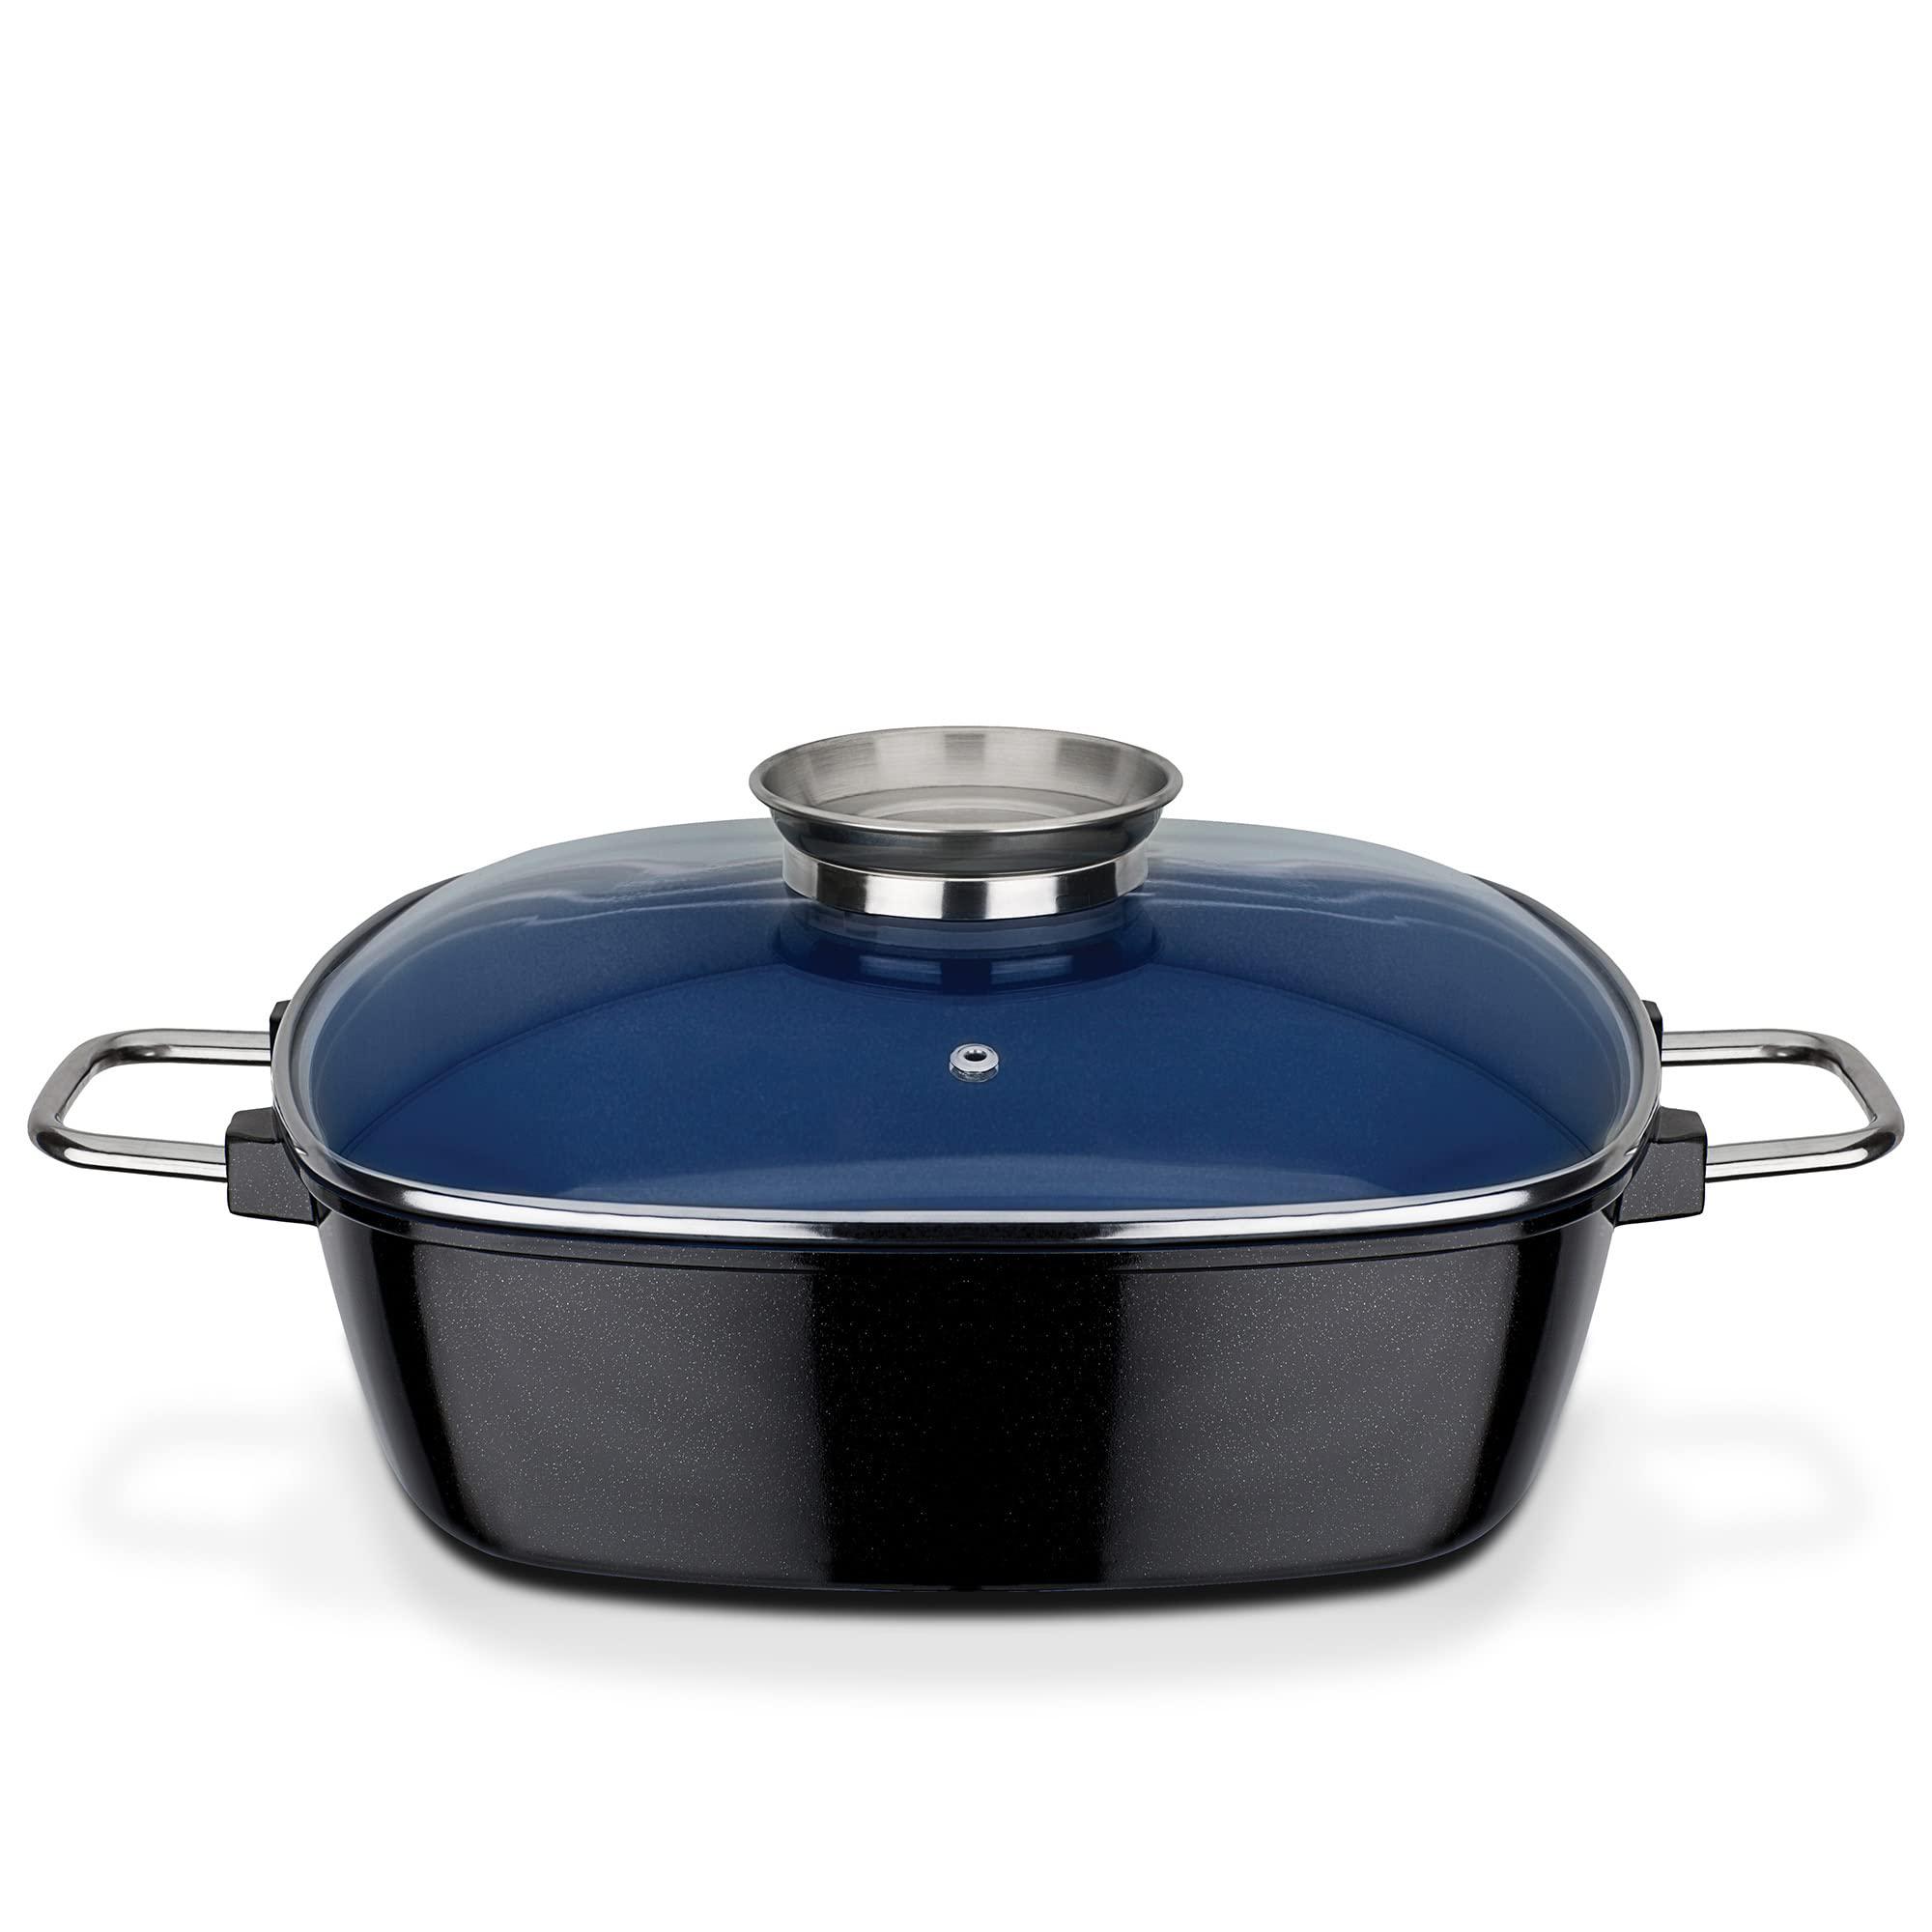 gsw stahlwaren gmbh roaster extra-high with aroma knob glass lid, blue/black/clear, 28 x 28 x 8.5 cm, 5 litre